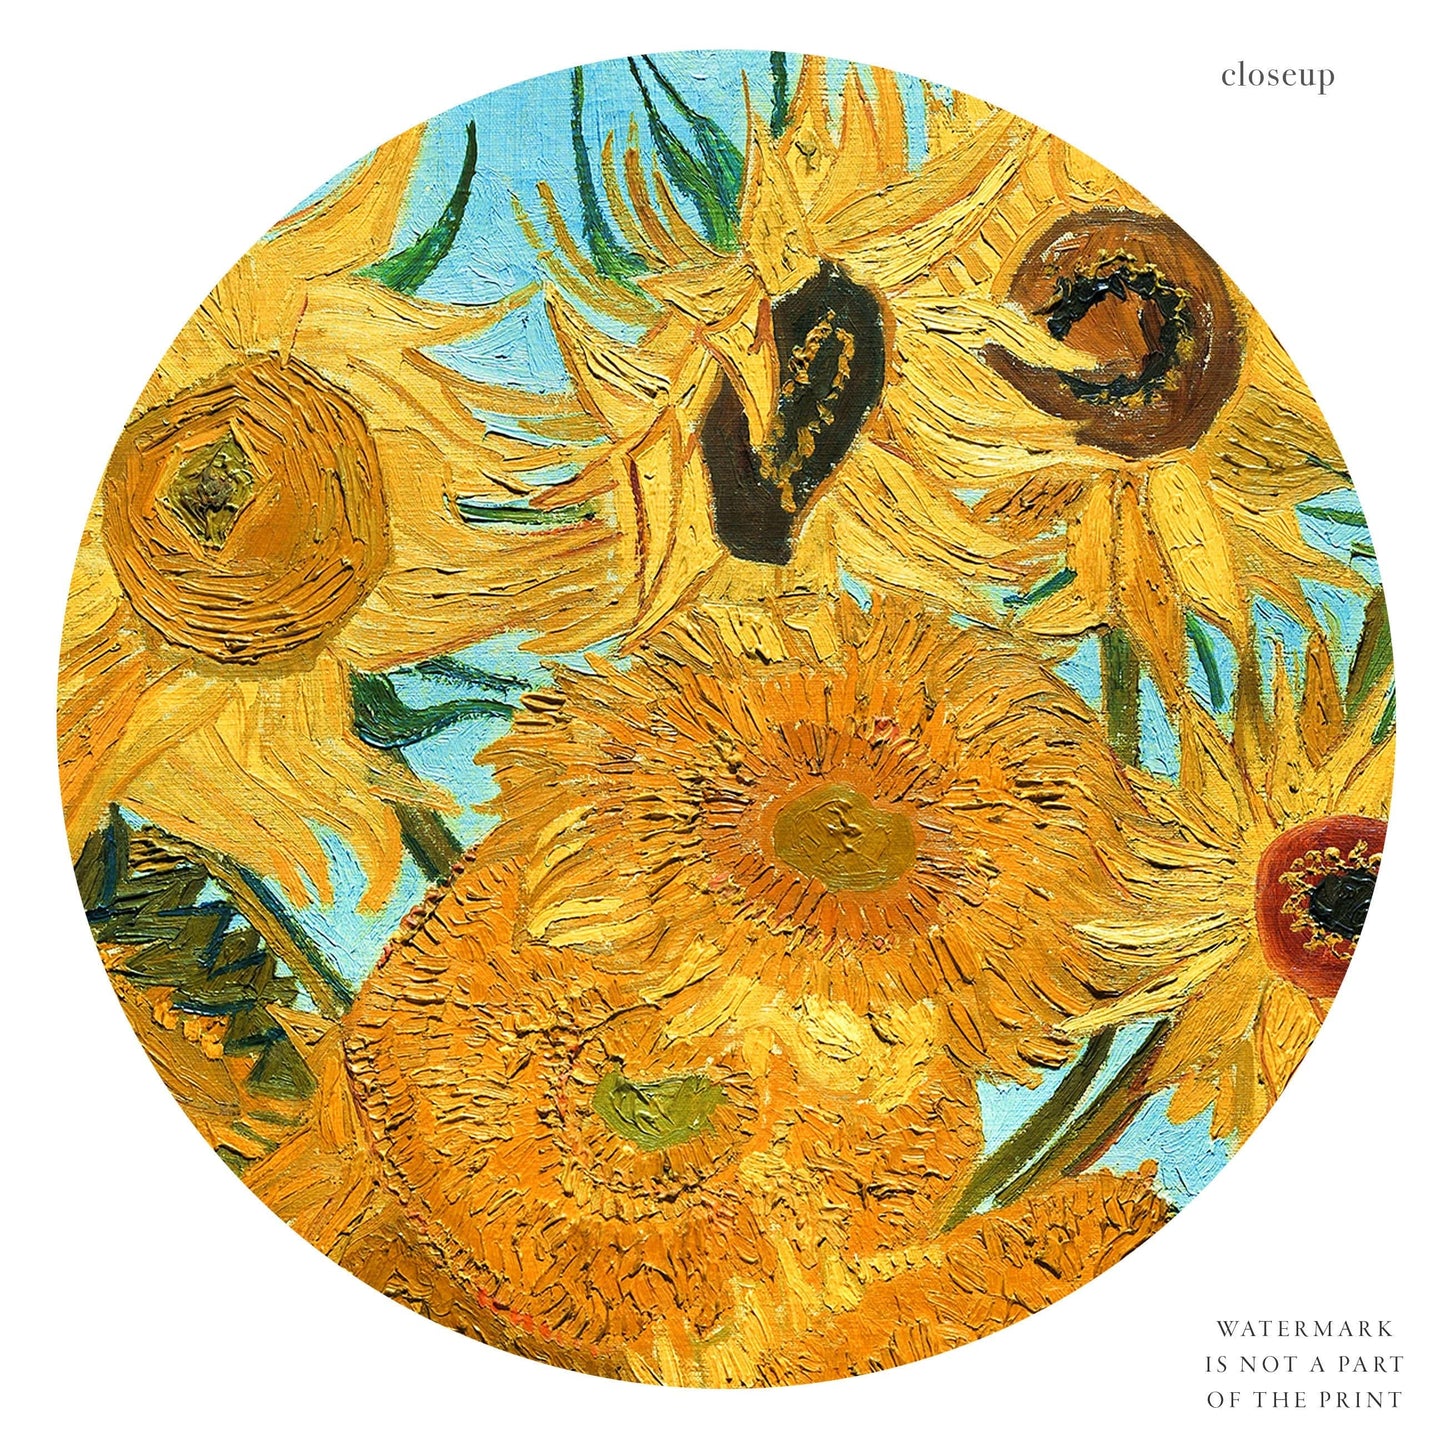 Home Poster Decor Van Gogh Sunflower, Van Gogh Prints, Floral Wall Art, Van Gogh Exhibition, Van Gogh Flowers, Still Life, Vase with Twelve sunflowers